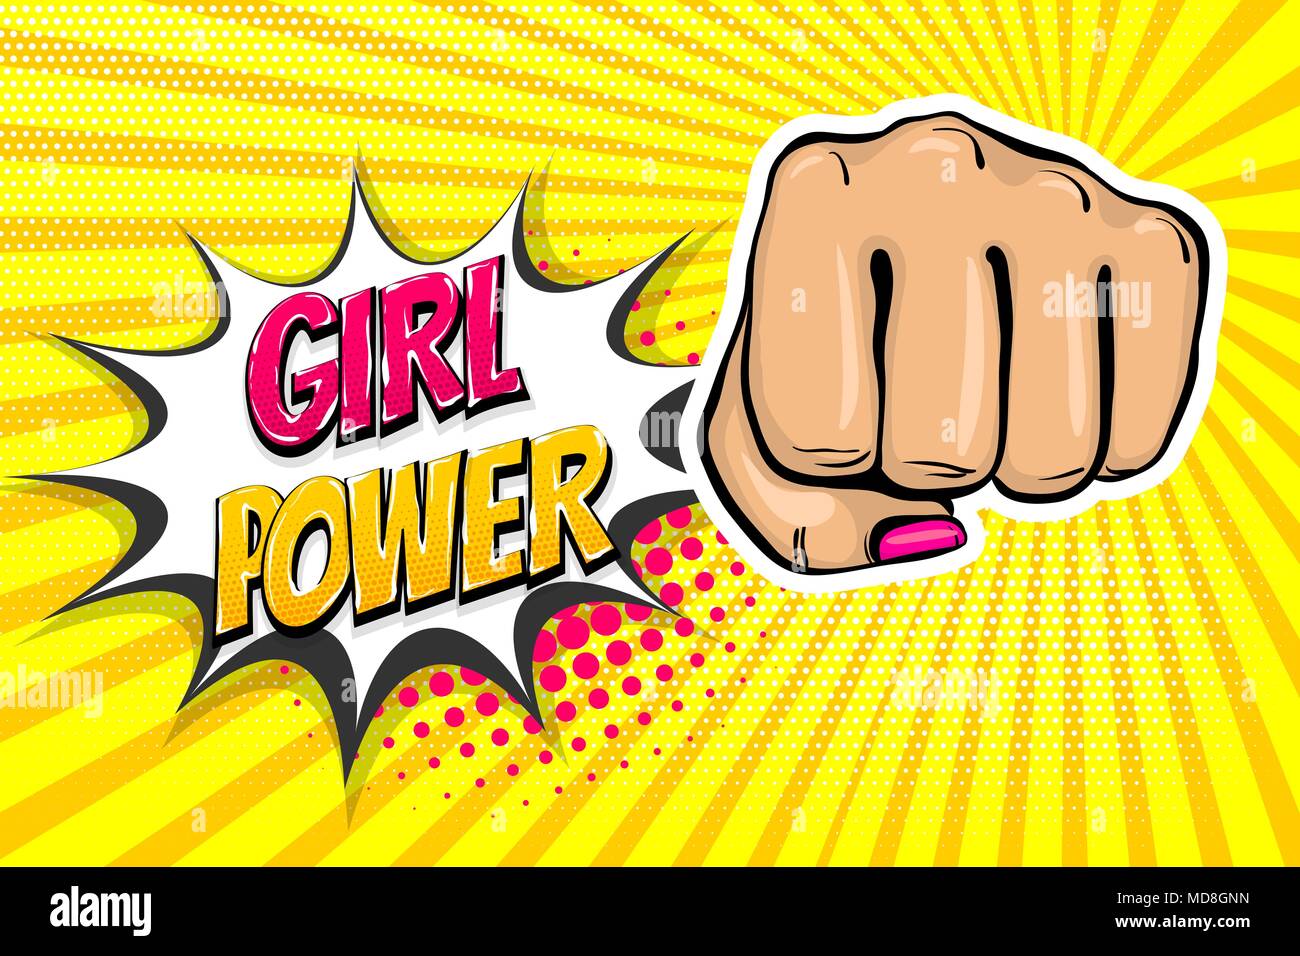 Girl woman power fist pop art style Stock Vector